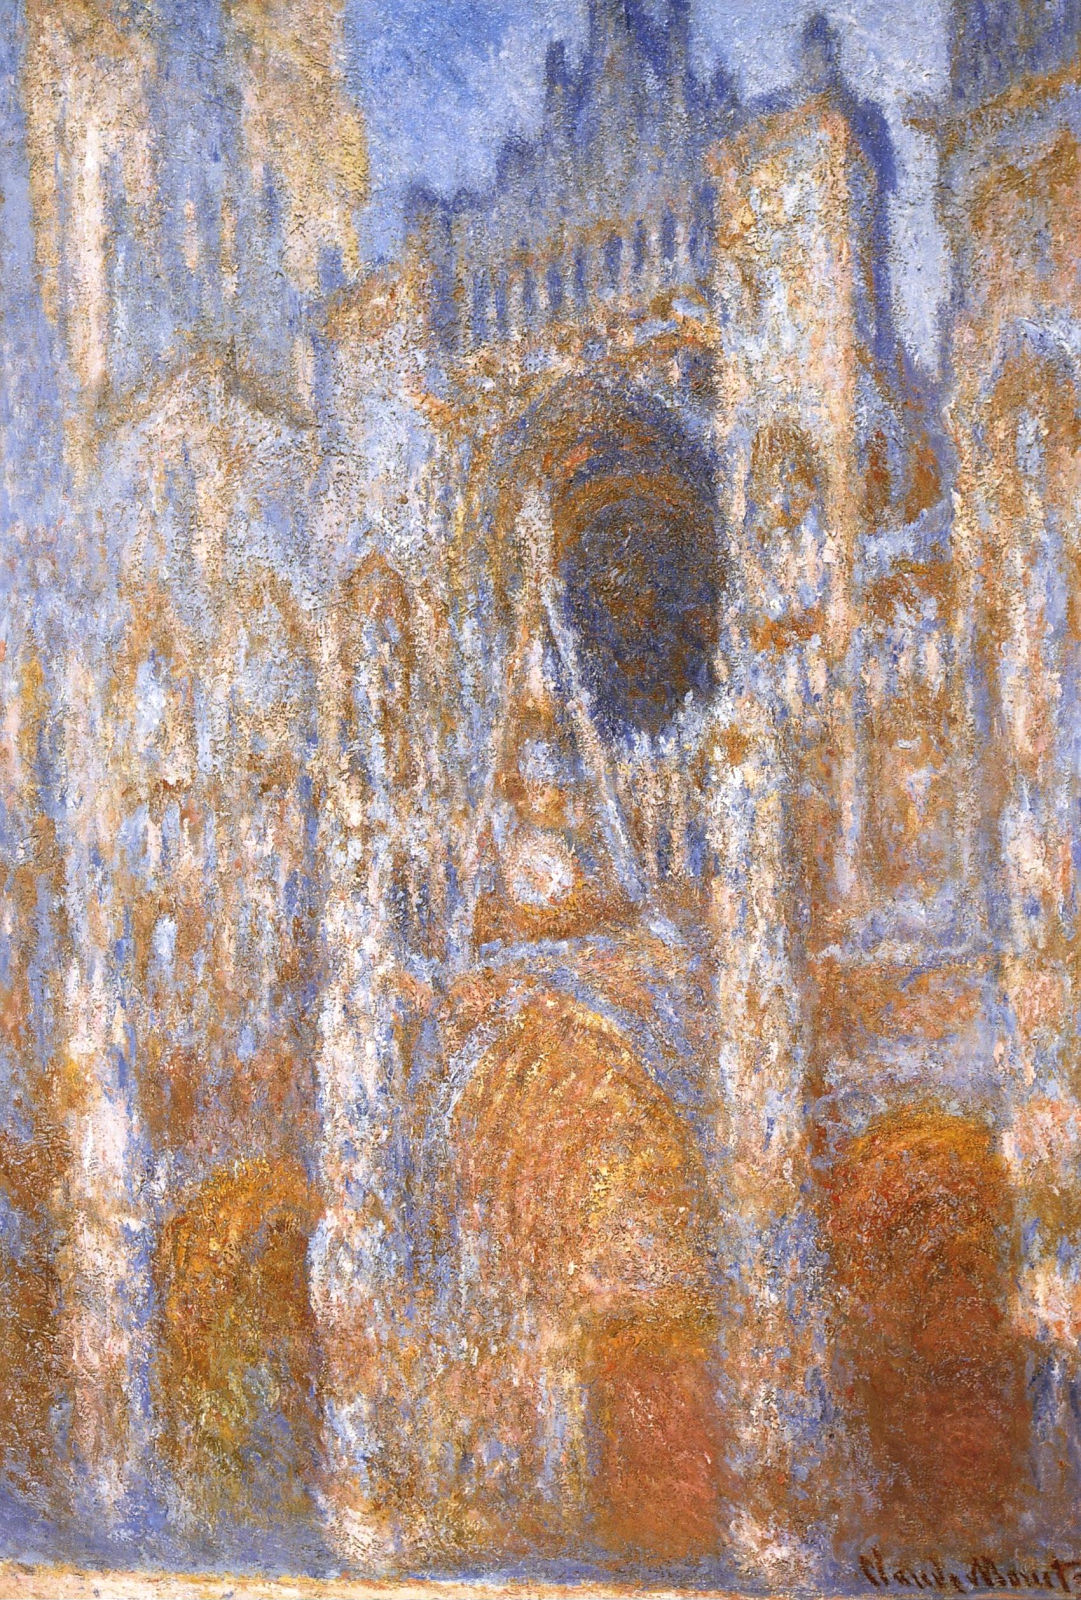 Claude+Monet-1840-1926 (650).jpg